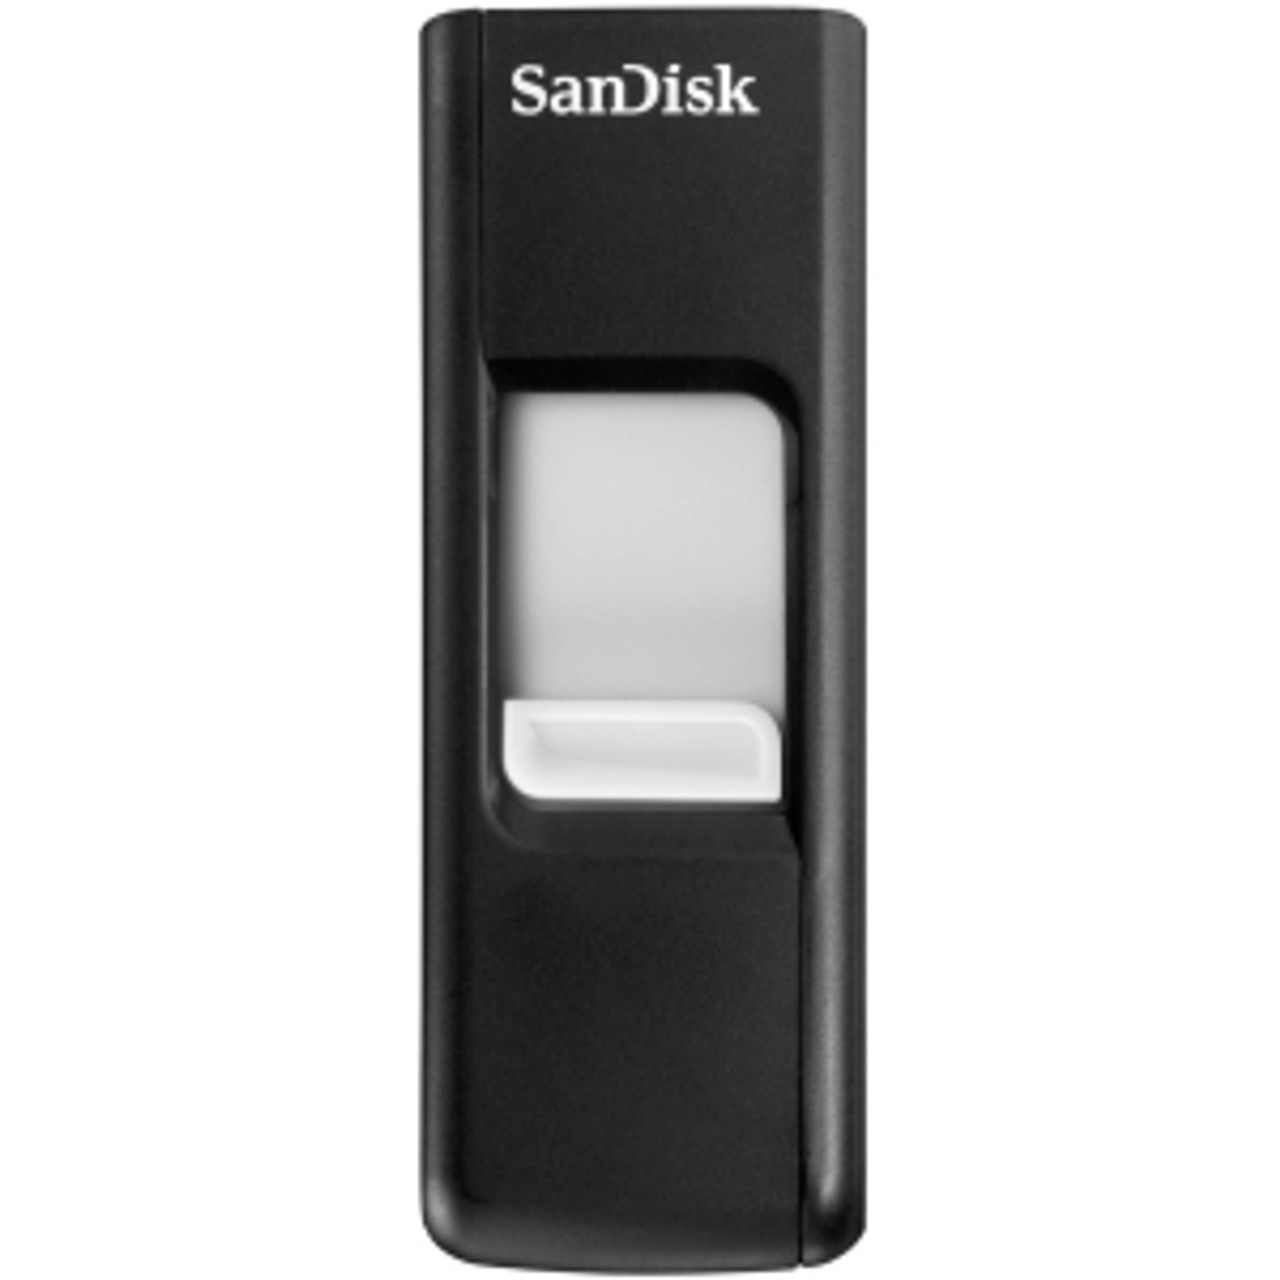 CZ36008GA11 - SanDisk Cruzer CZ36008GA11 8 GB USB 2.0 Flash Drive - External